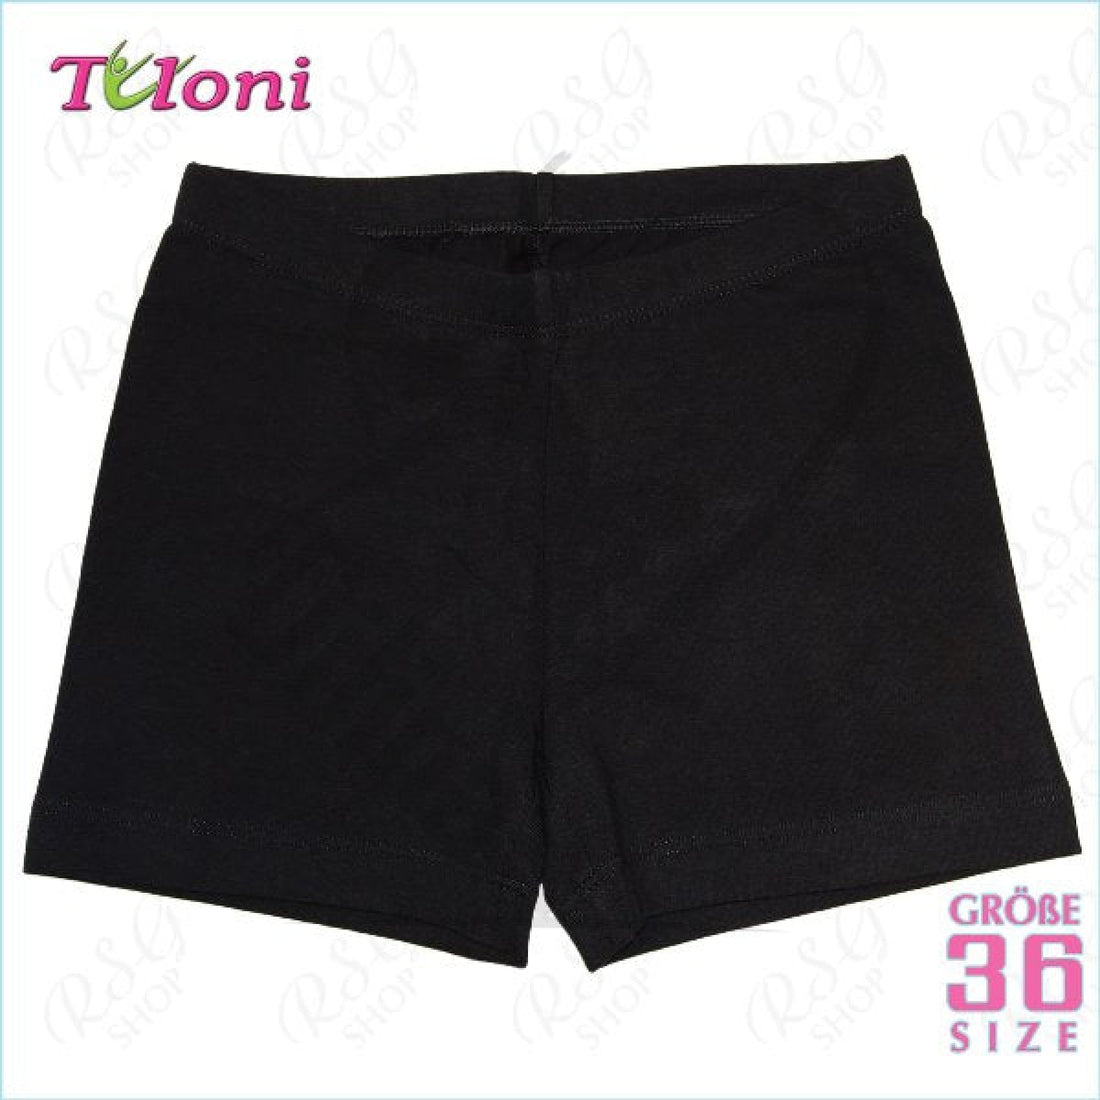 Tuloni Shorts Black 36 (128-134)